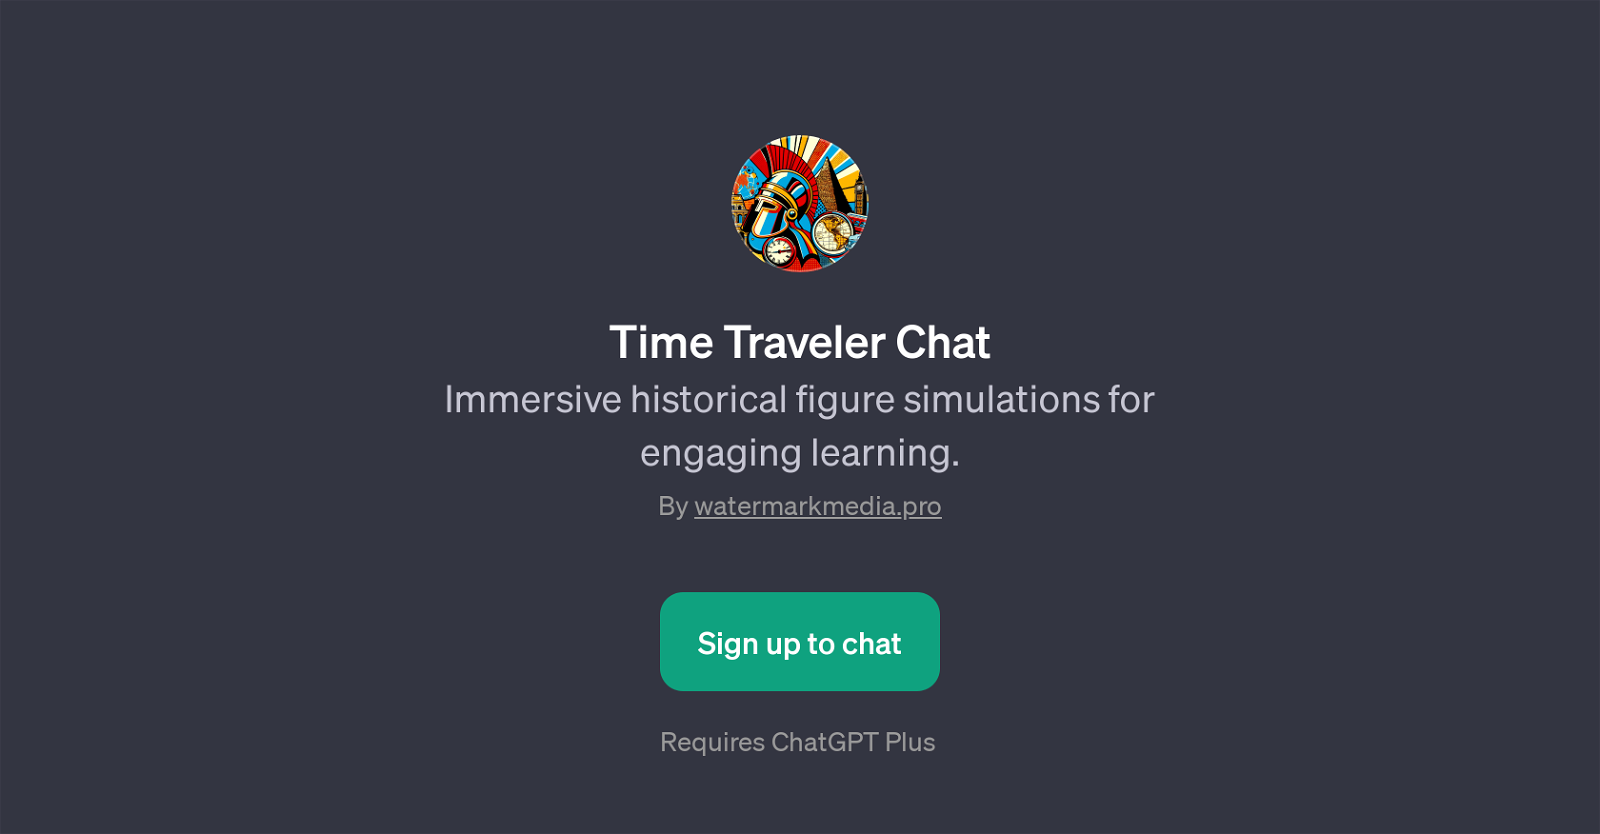 Time Traveler Chat website